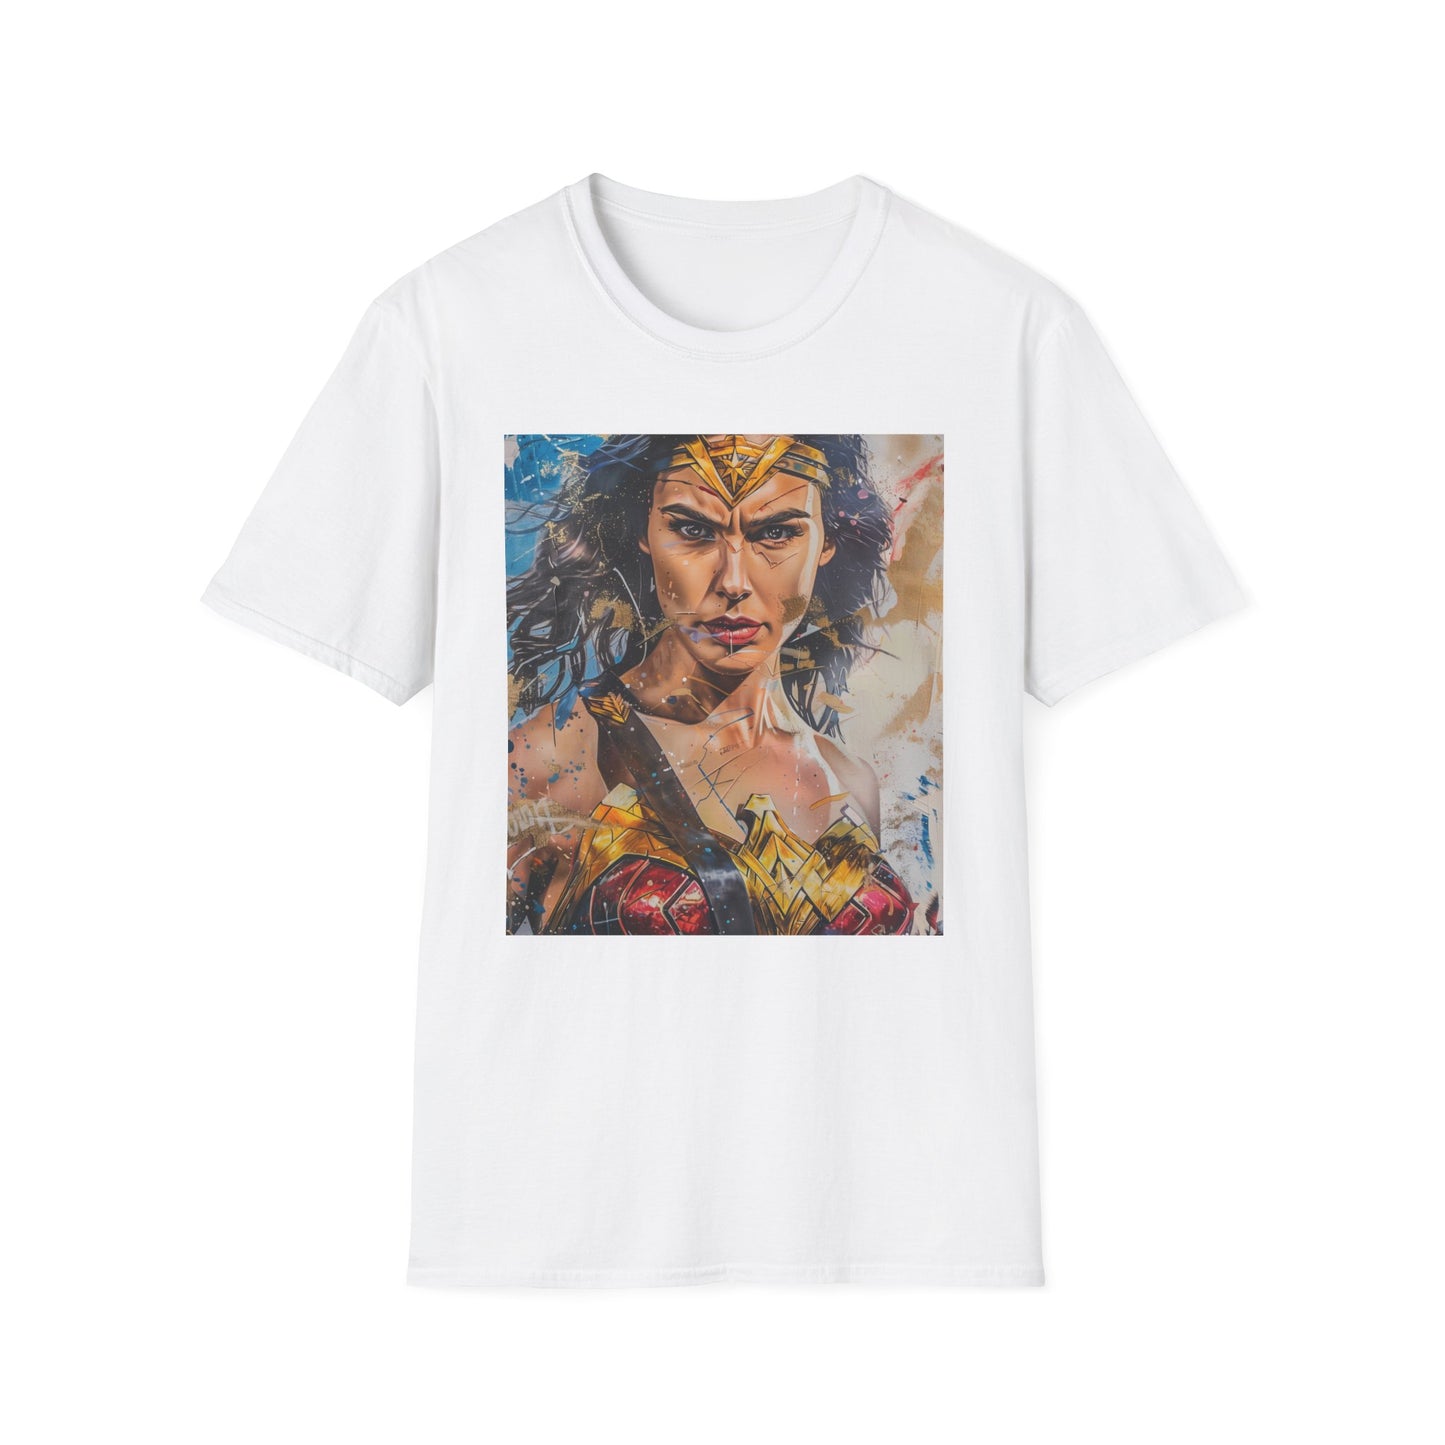 "Amazonian Grace: The Timeless Legacy of Wonder Woman"